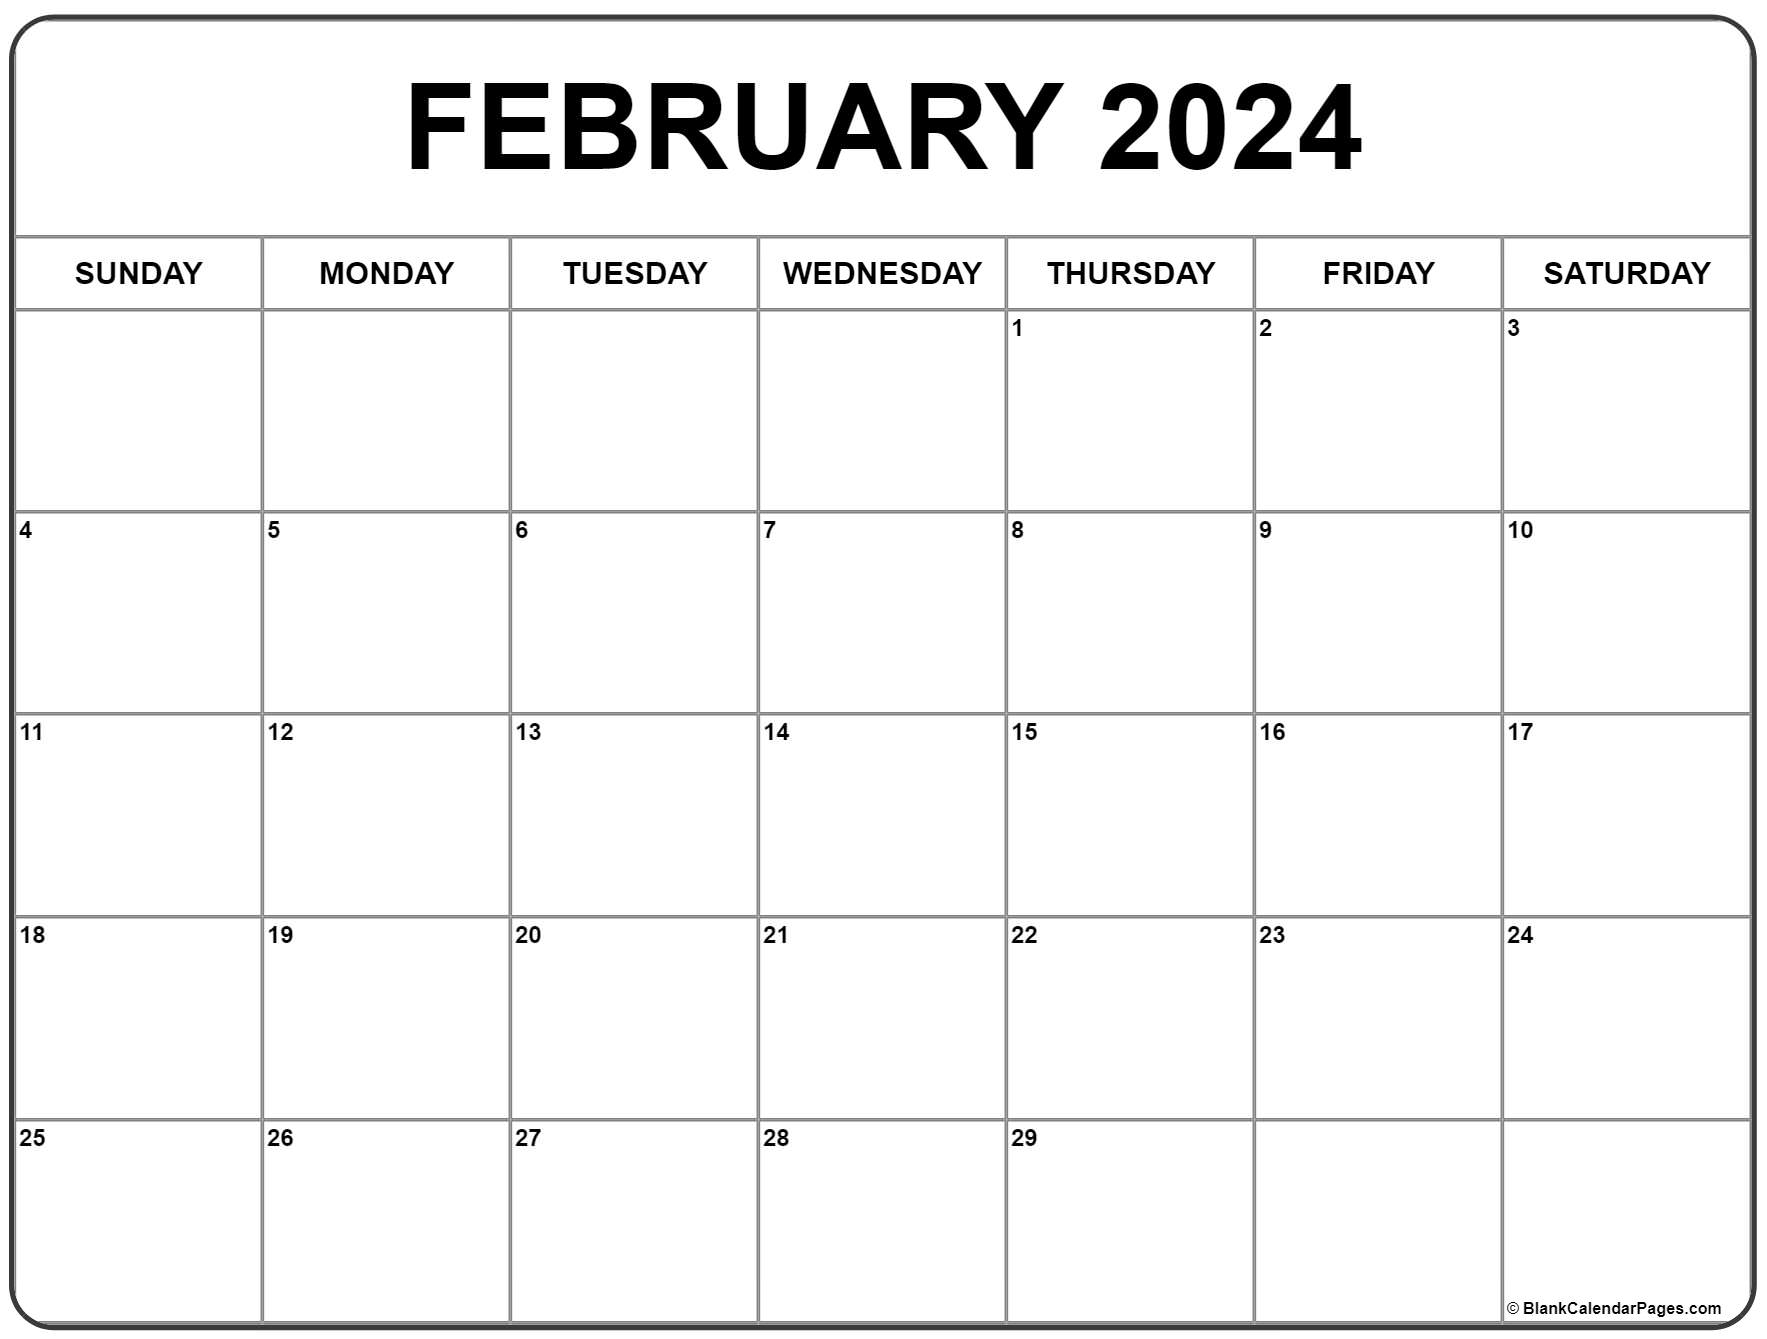 February 2024 Calendar | Free Printable Calendar for Printable Monthly Calendar Feb 2024